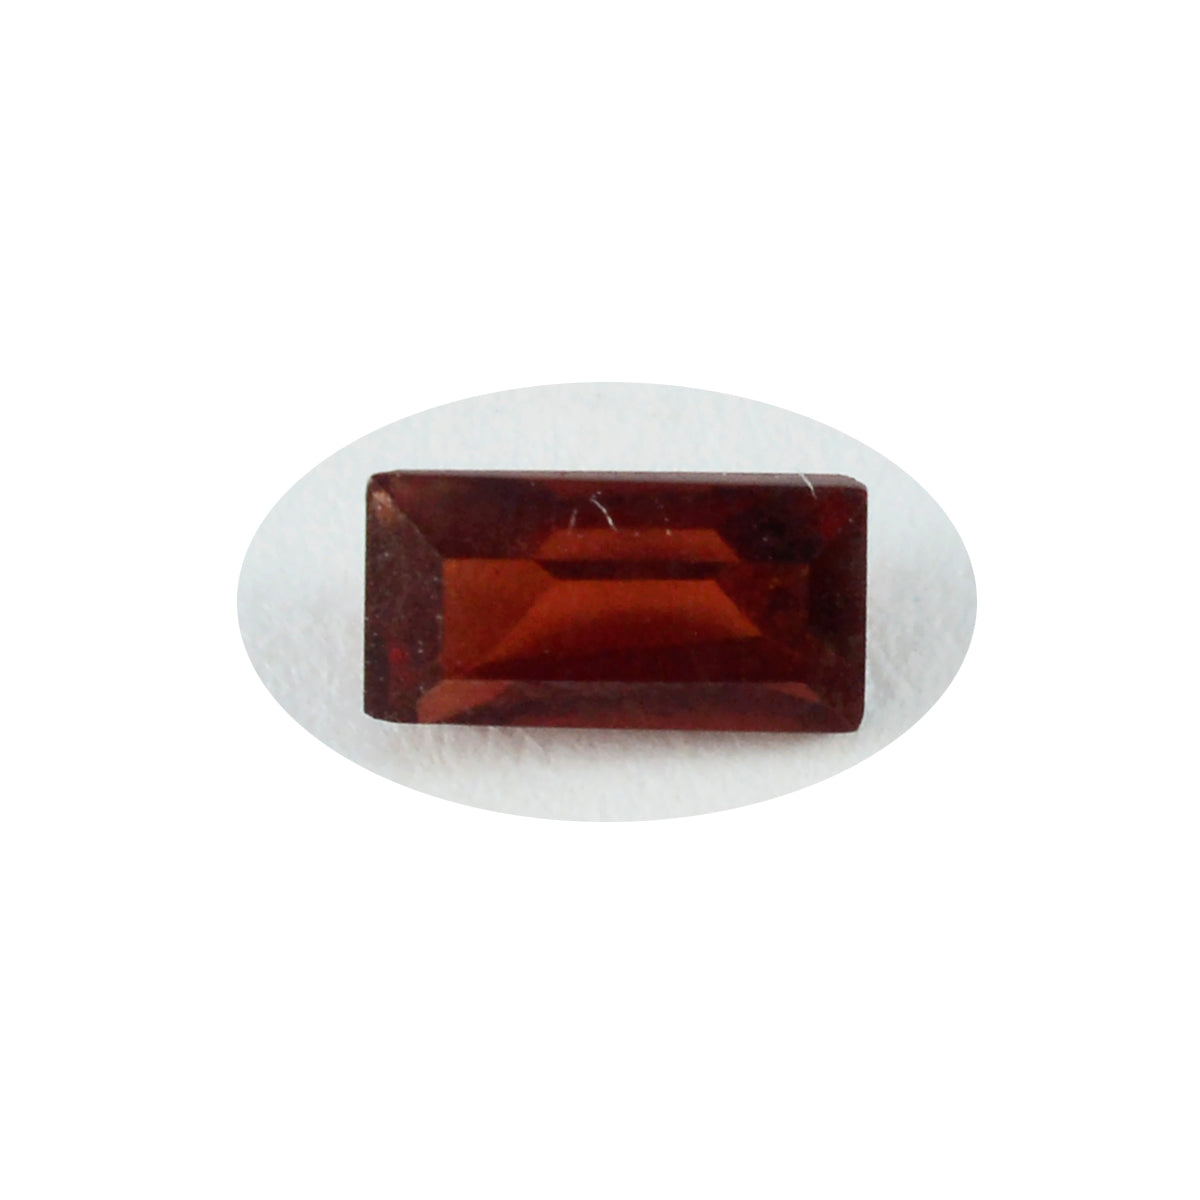 Riyogems 1PC Natuurlijke Rode Granaat Facet 8x16 mm Stokbroodvorm AA Kwaliteit Gem